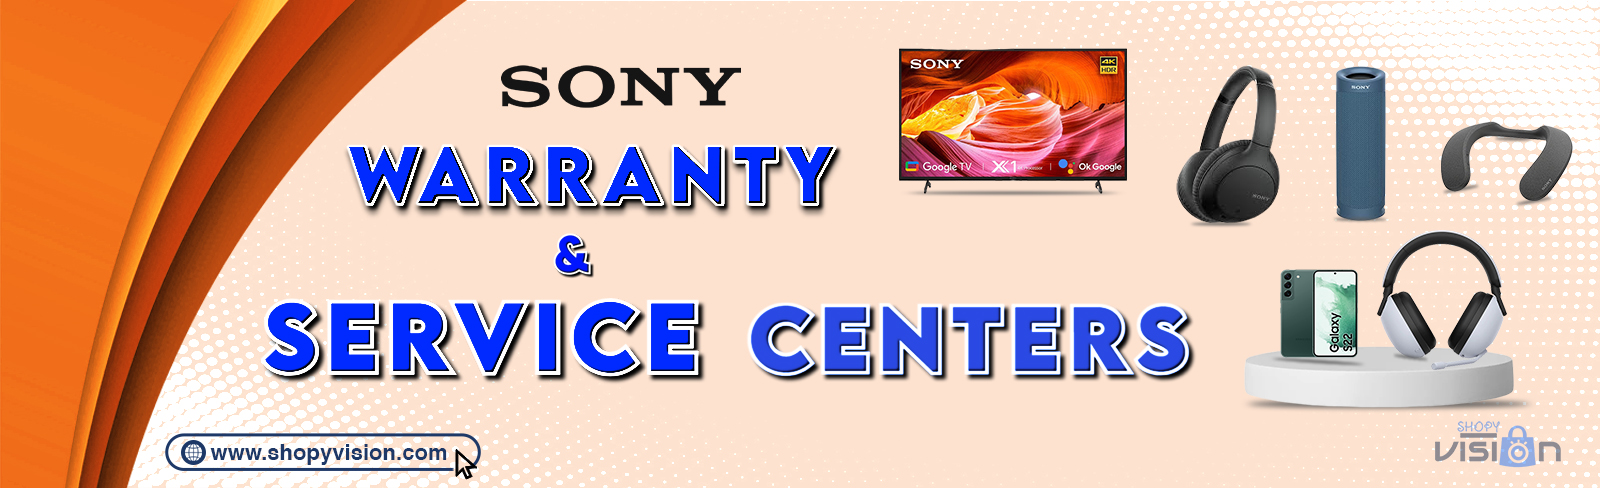 Sony Warranty & Service Center Banner